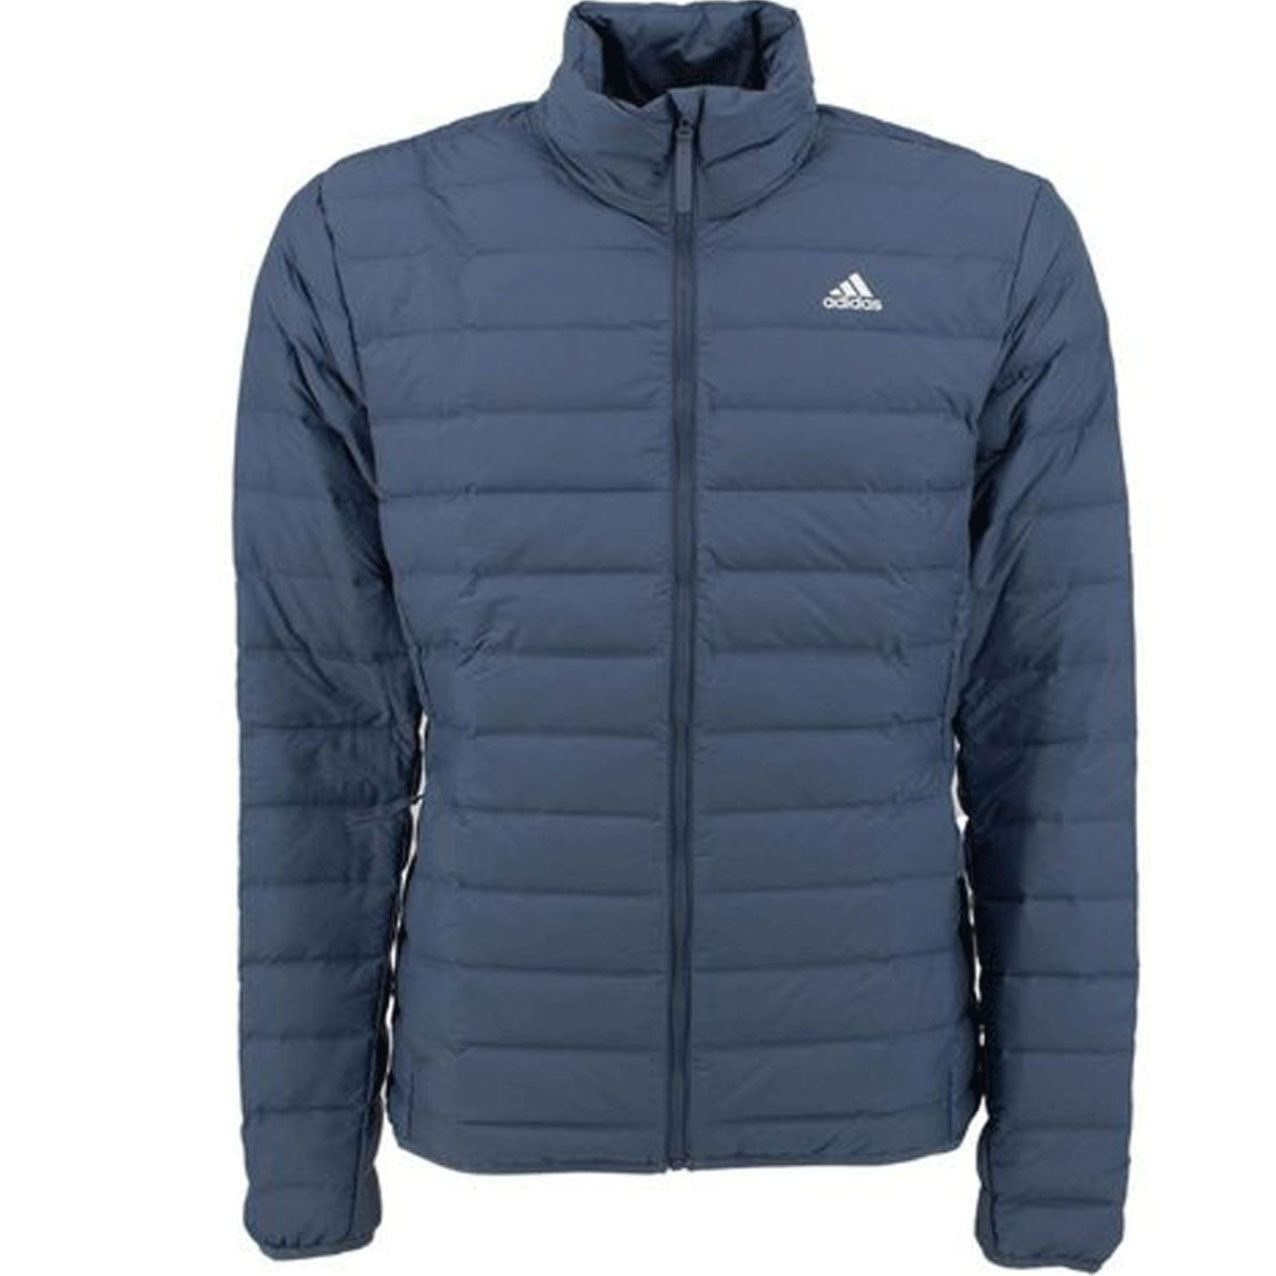 Adidas Mens Jacket Varilite Tech Ink Jacket Long Sleeve Full Zip Jacket Blue - MRGOUTLETS